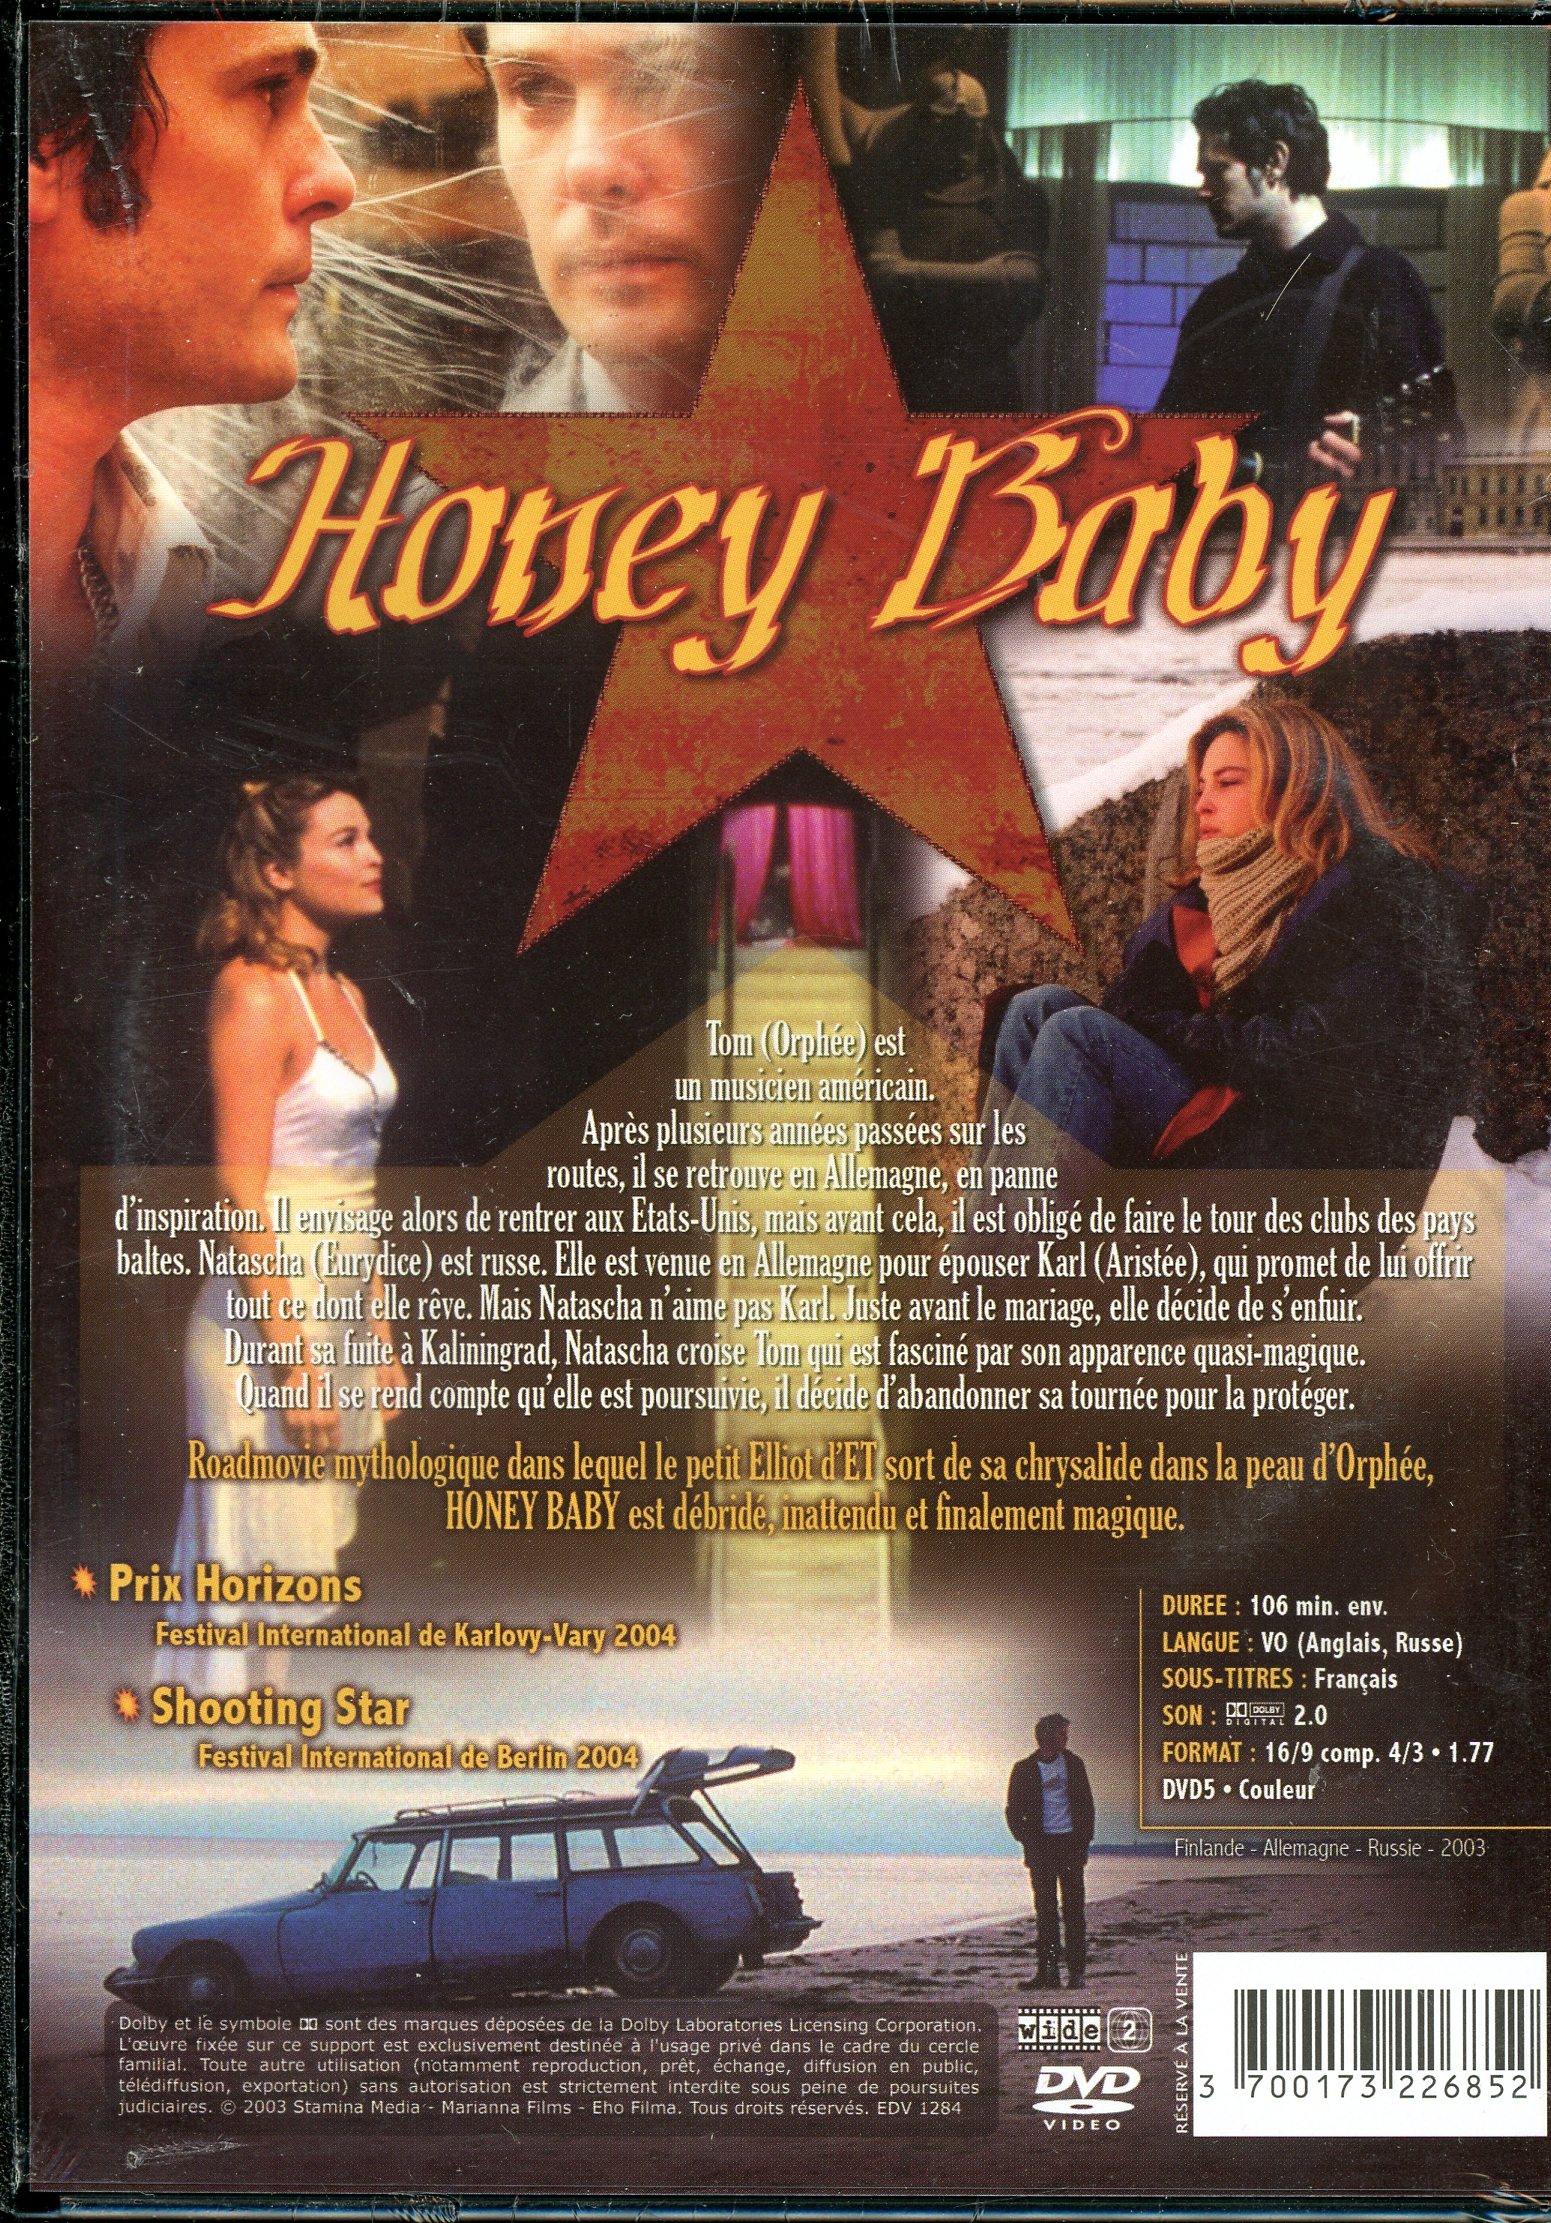 HONEY BABY - DVD NEUF - 3700173226852 - LEMASTERBROCKERS